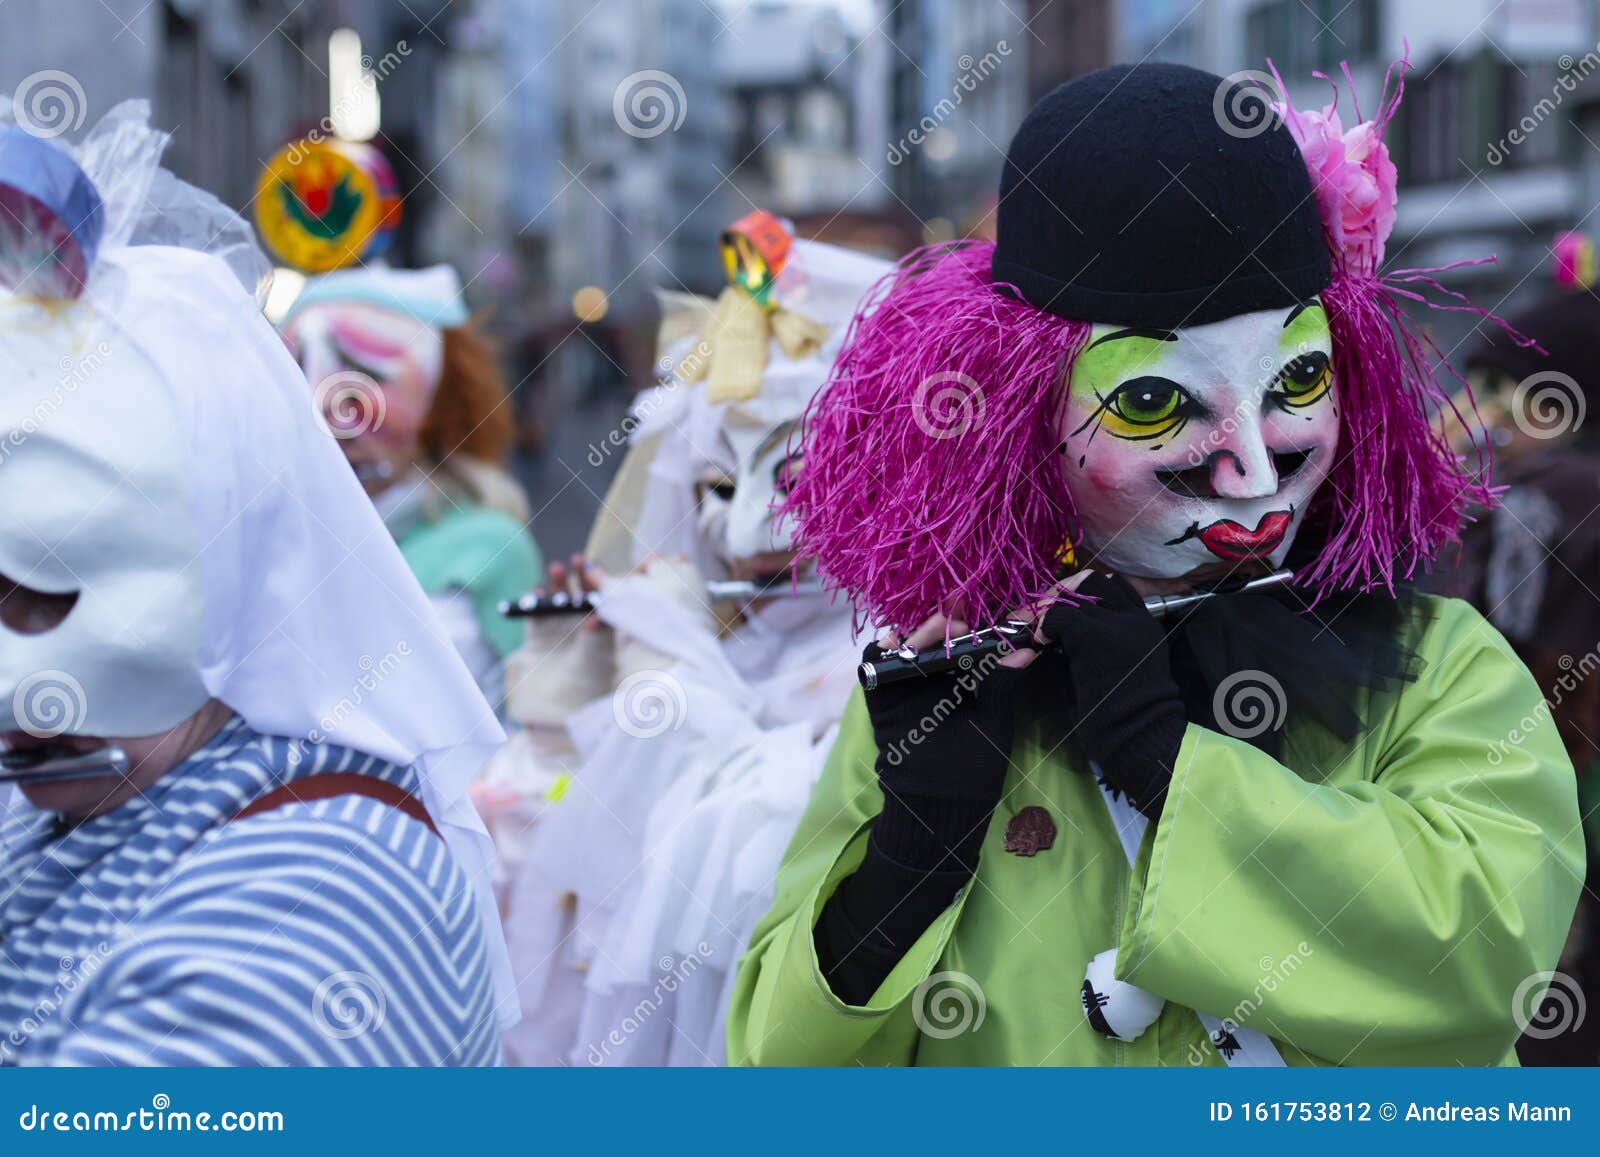 Basel Carnival 2019 Morgestraich Parade Editorial Photography - Image ...